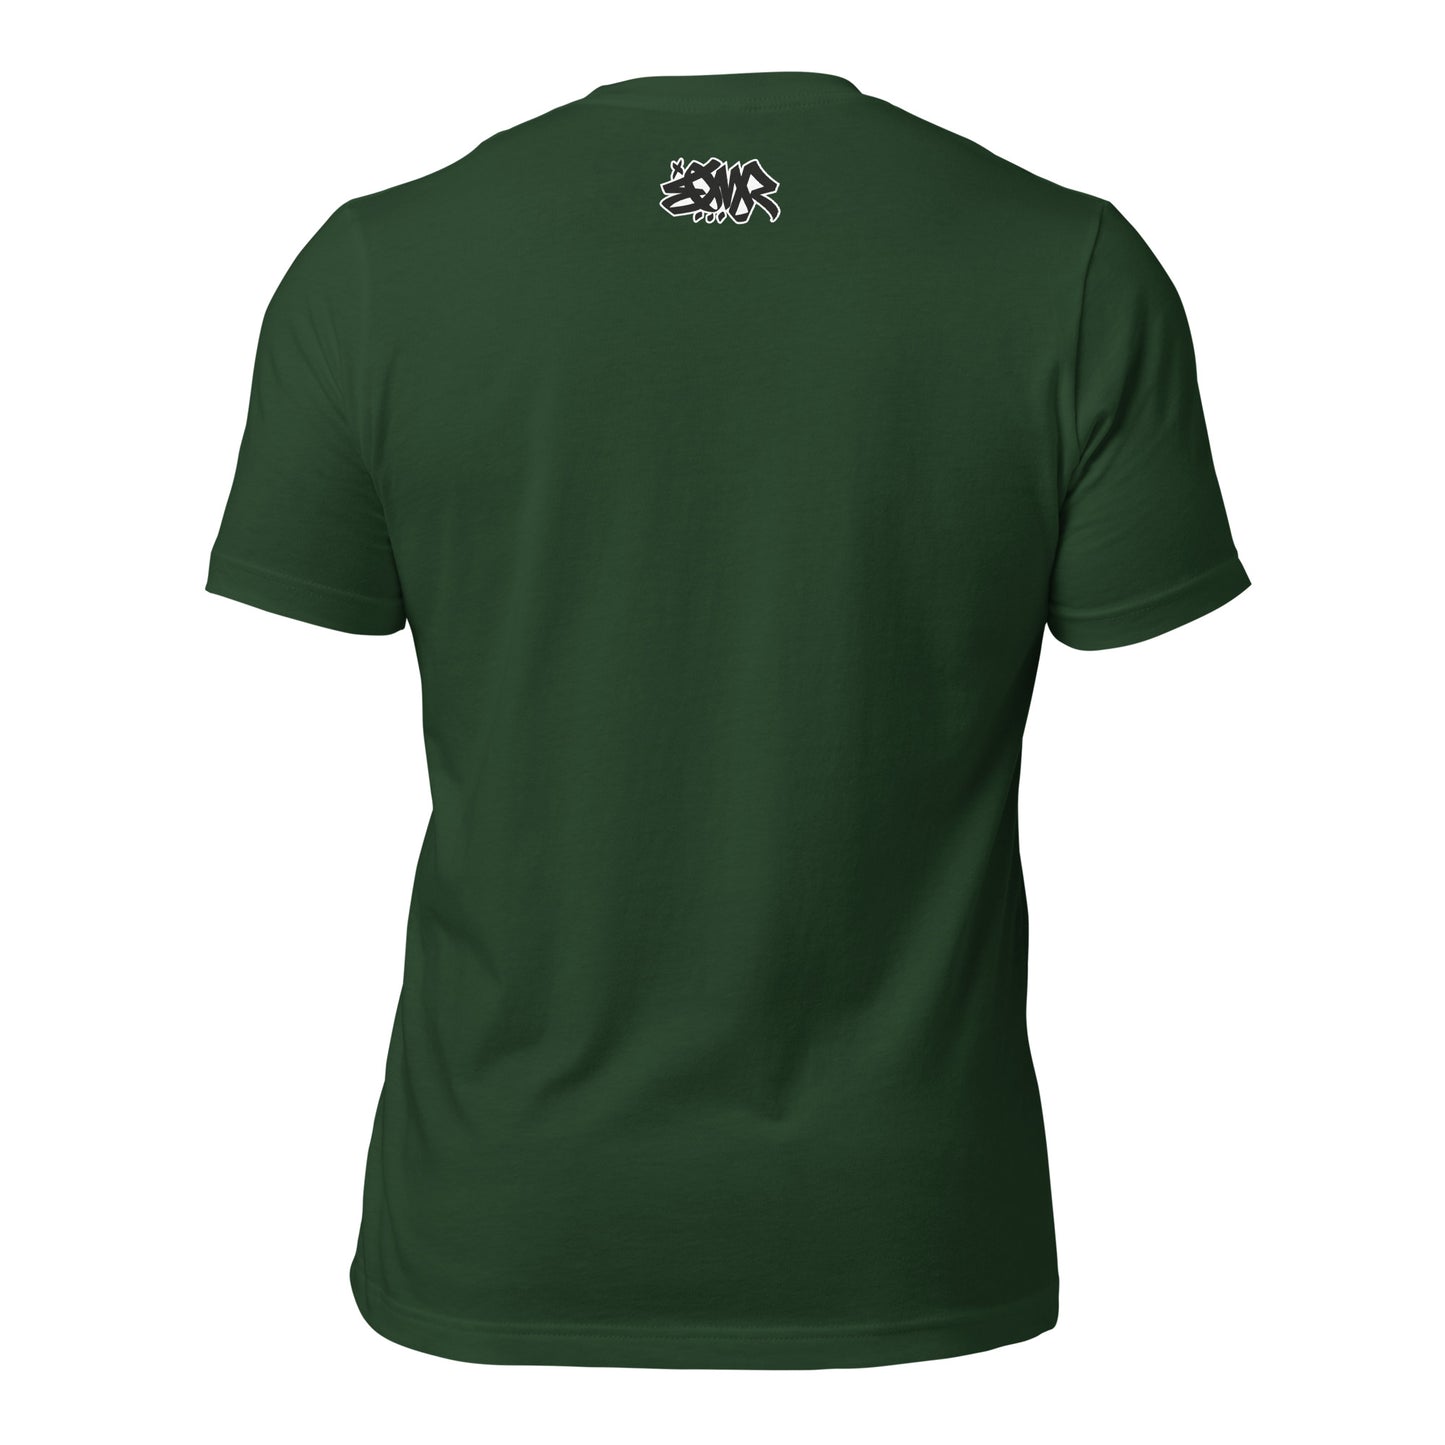 Unisex t-shirt "Totemfly" 3GSS